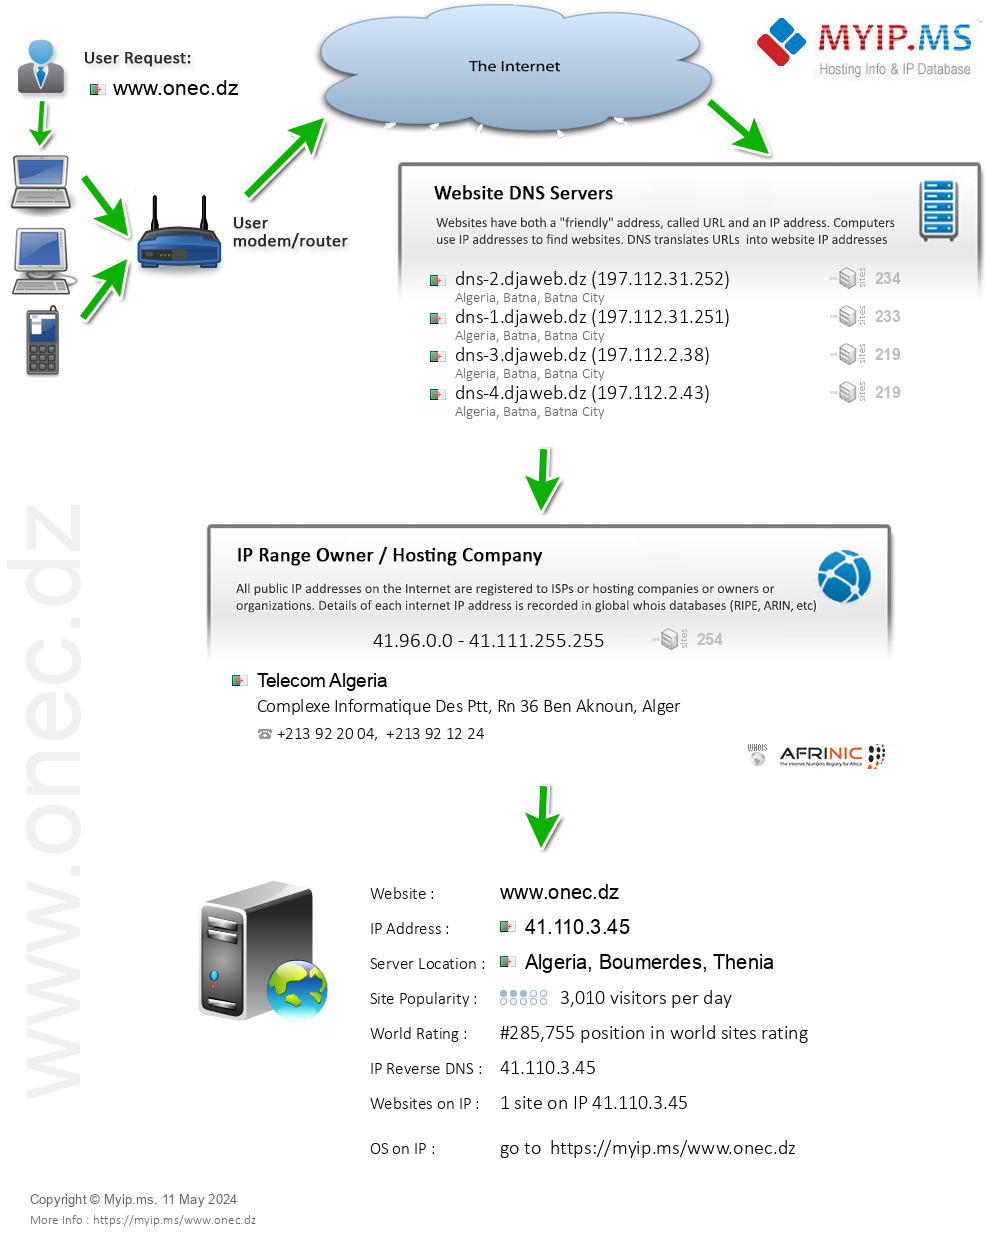 Onec.dz - Website Hosting Visual IP Diagram